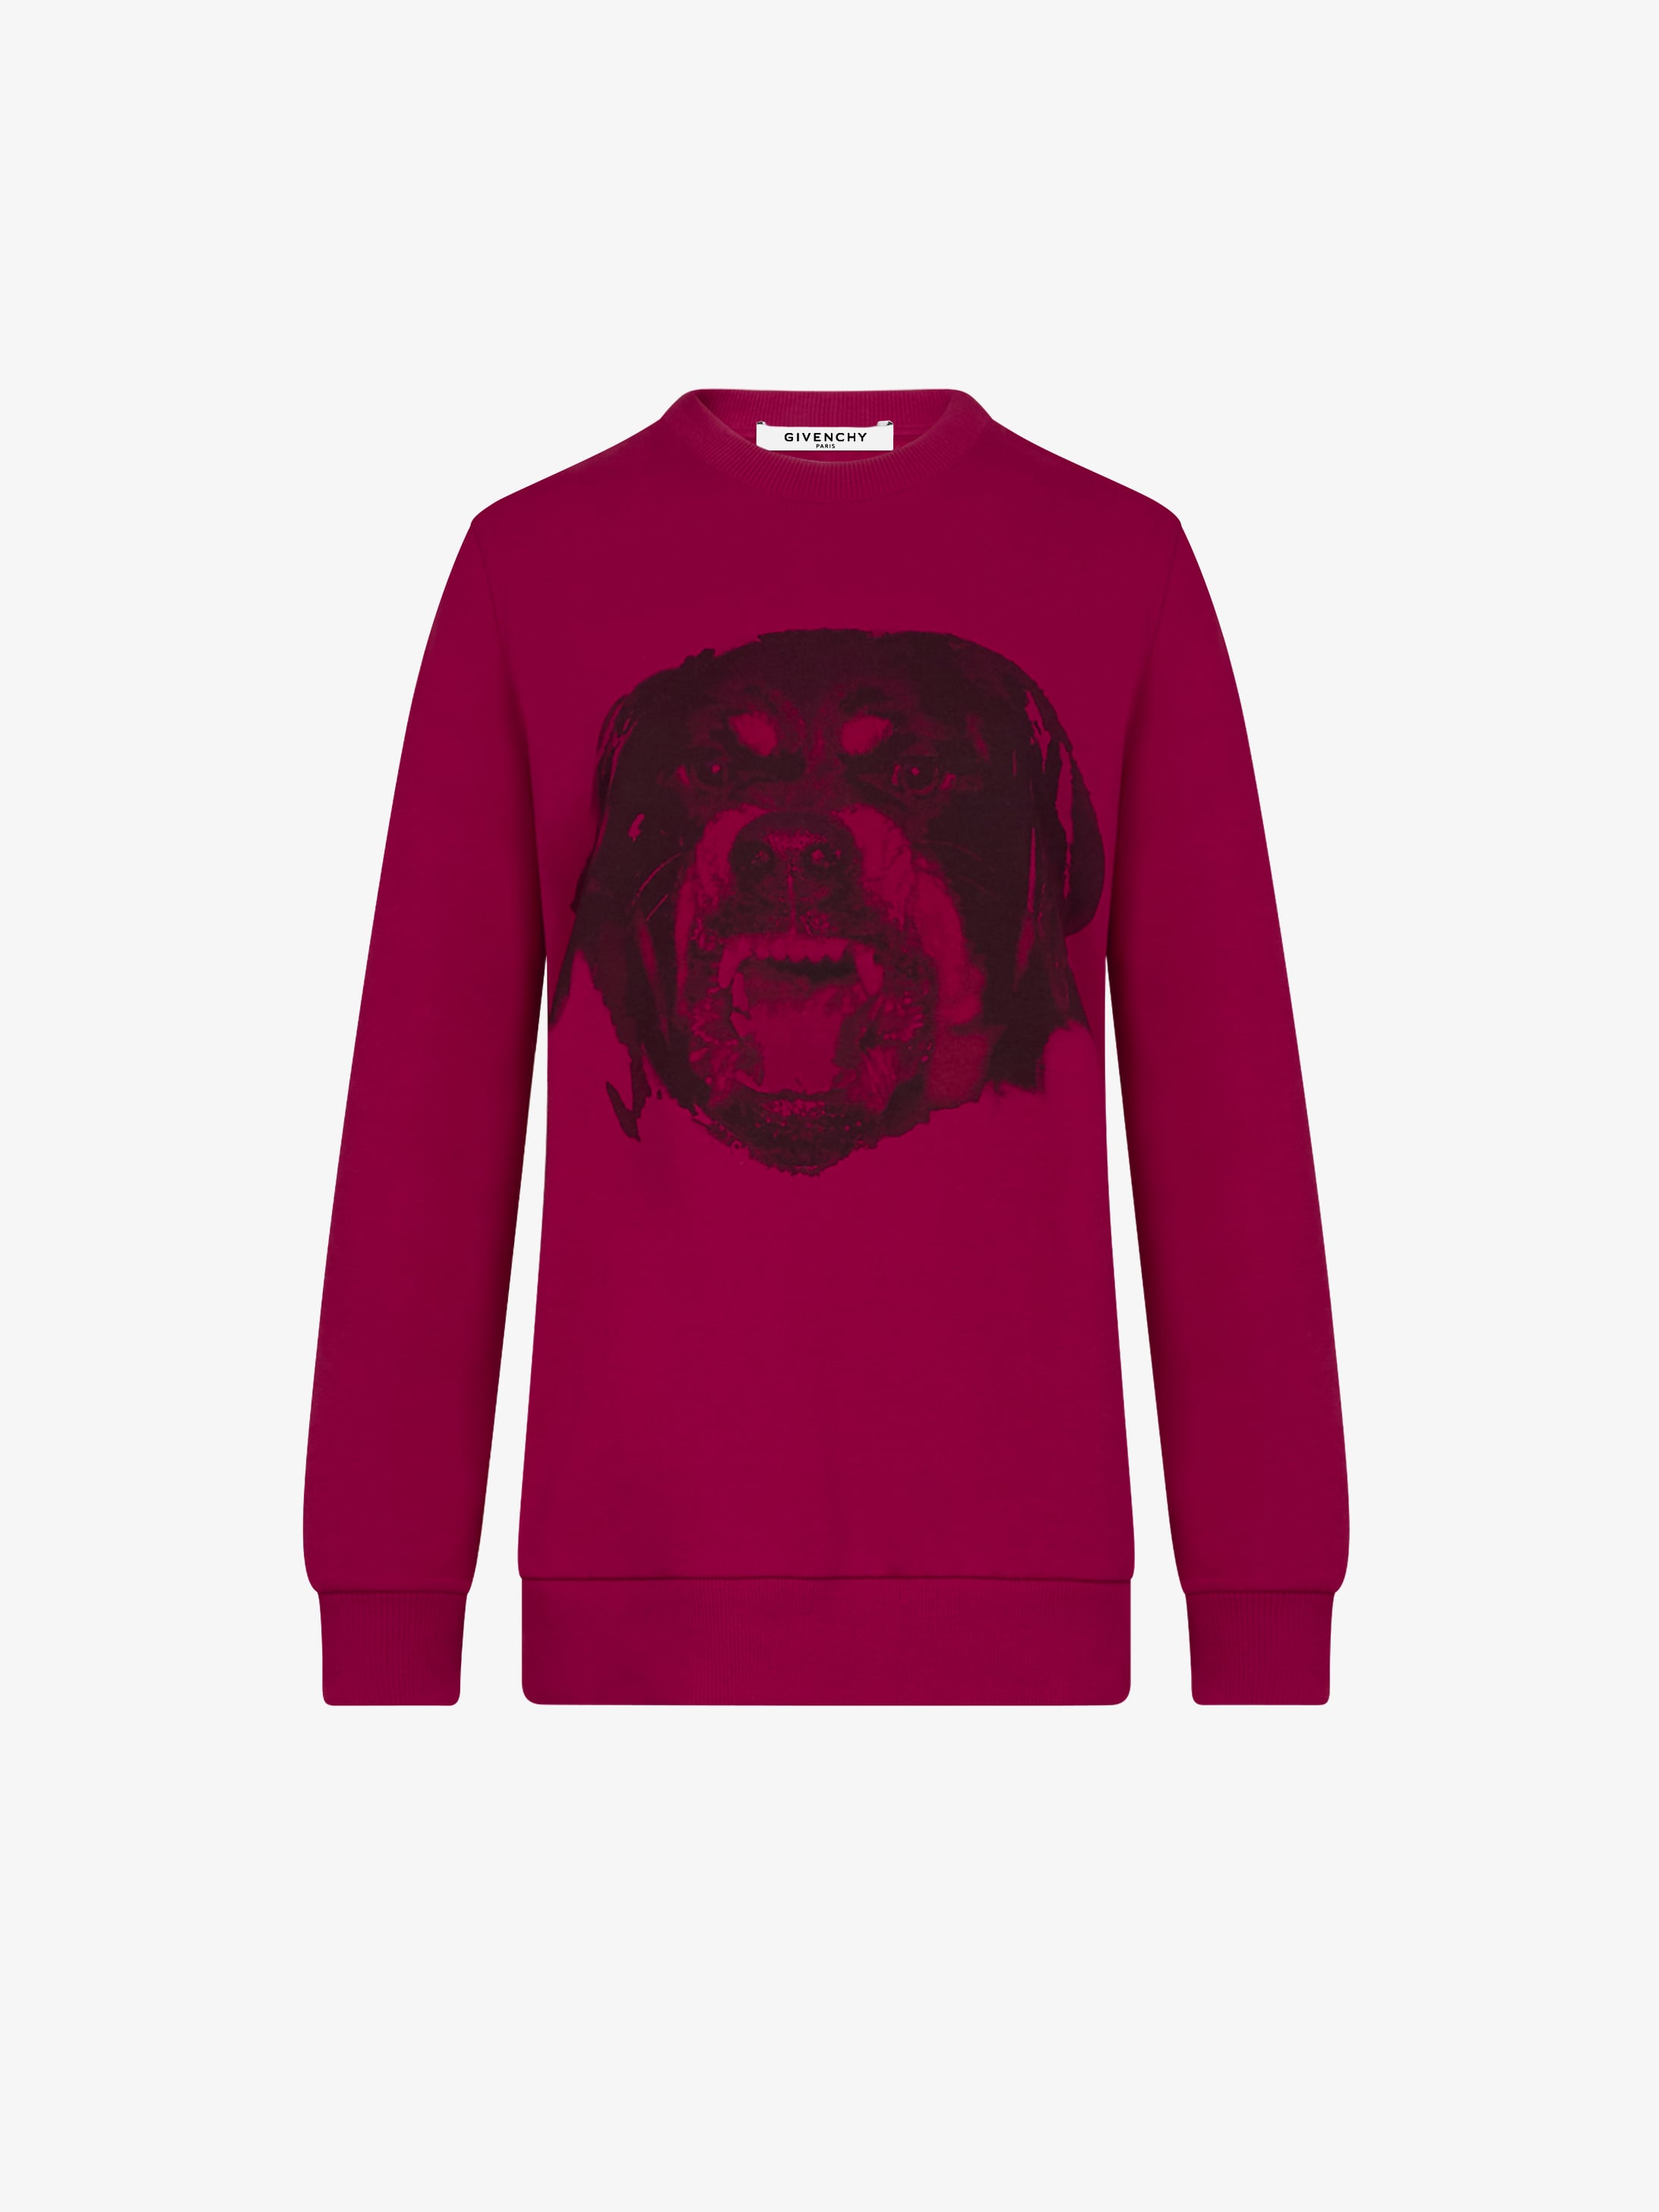 Rottweiler sweatshirt | GIVENCHY Paris